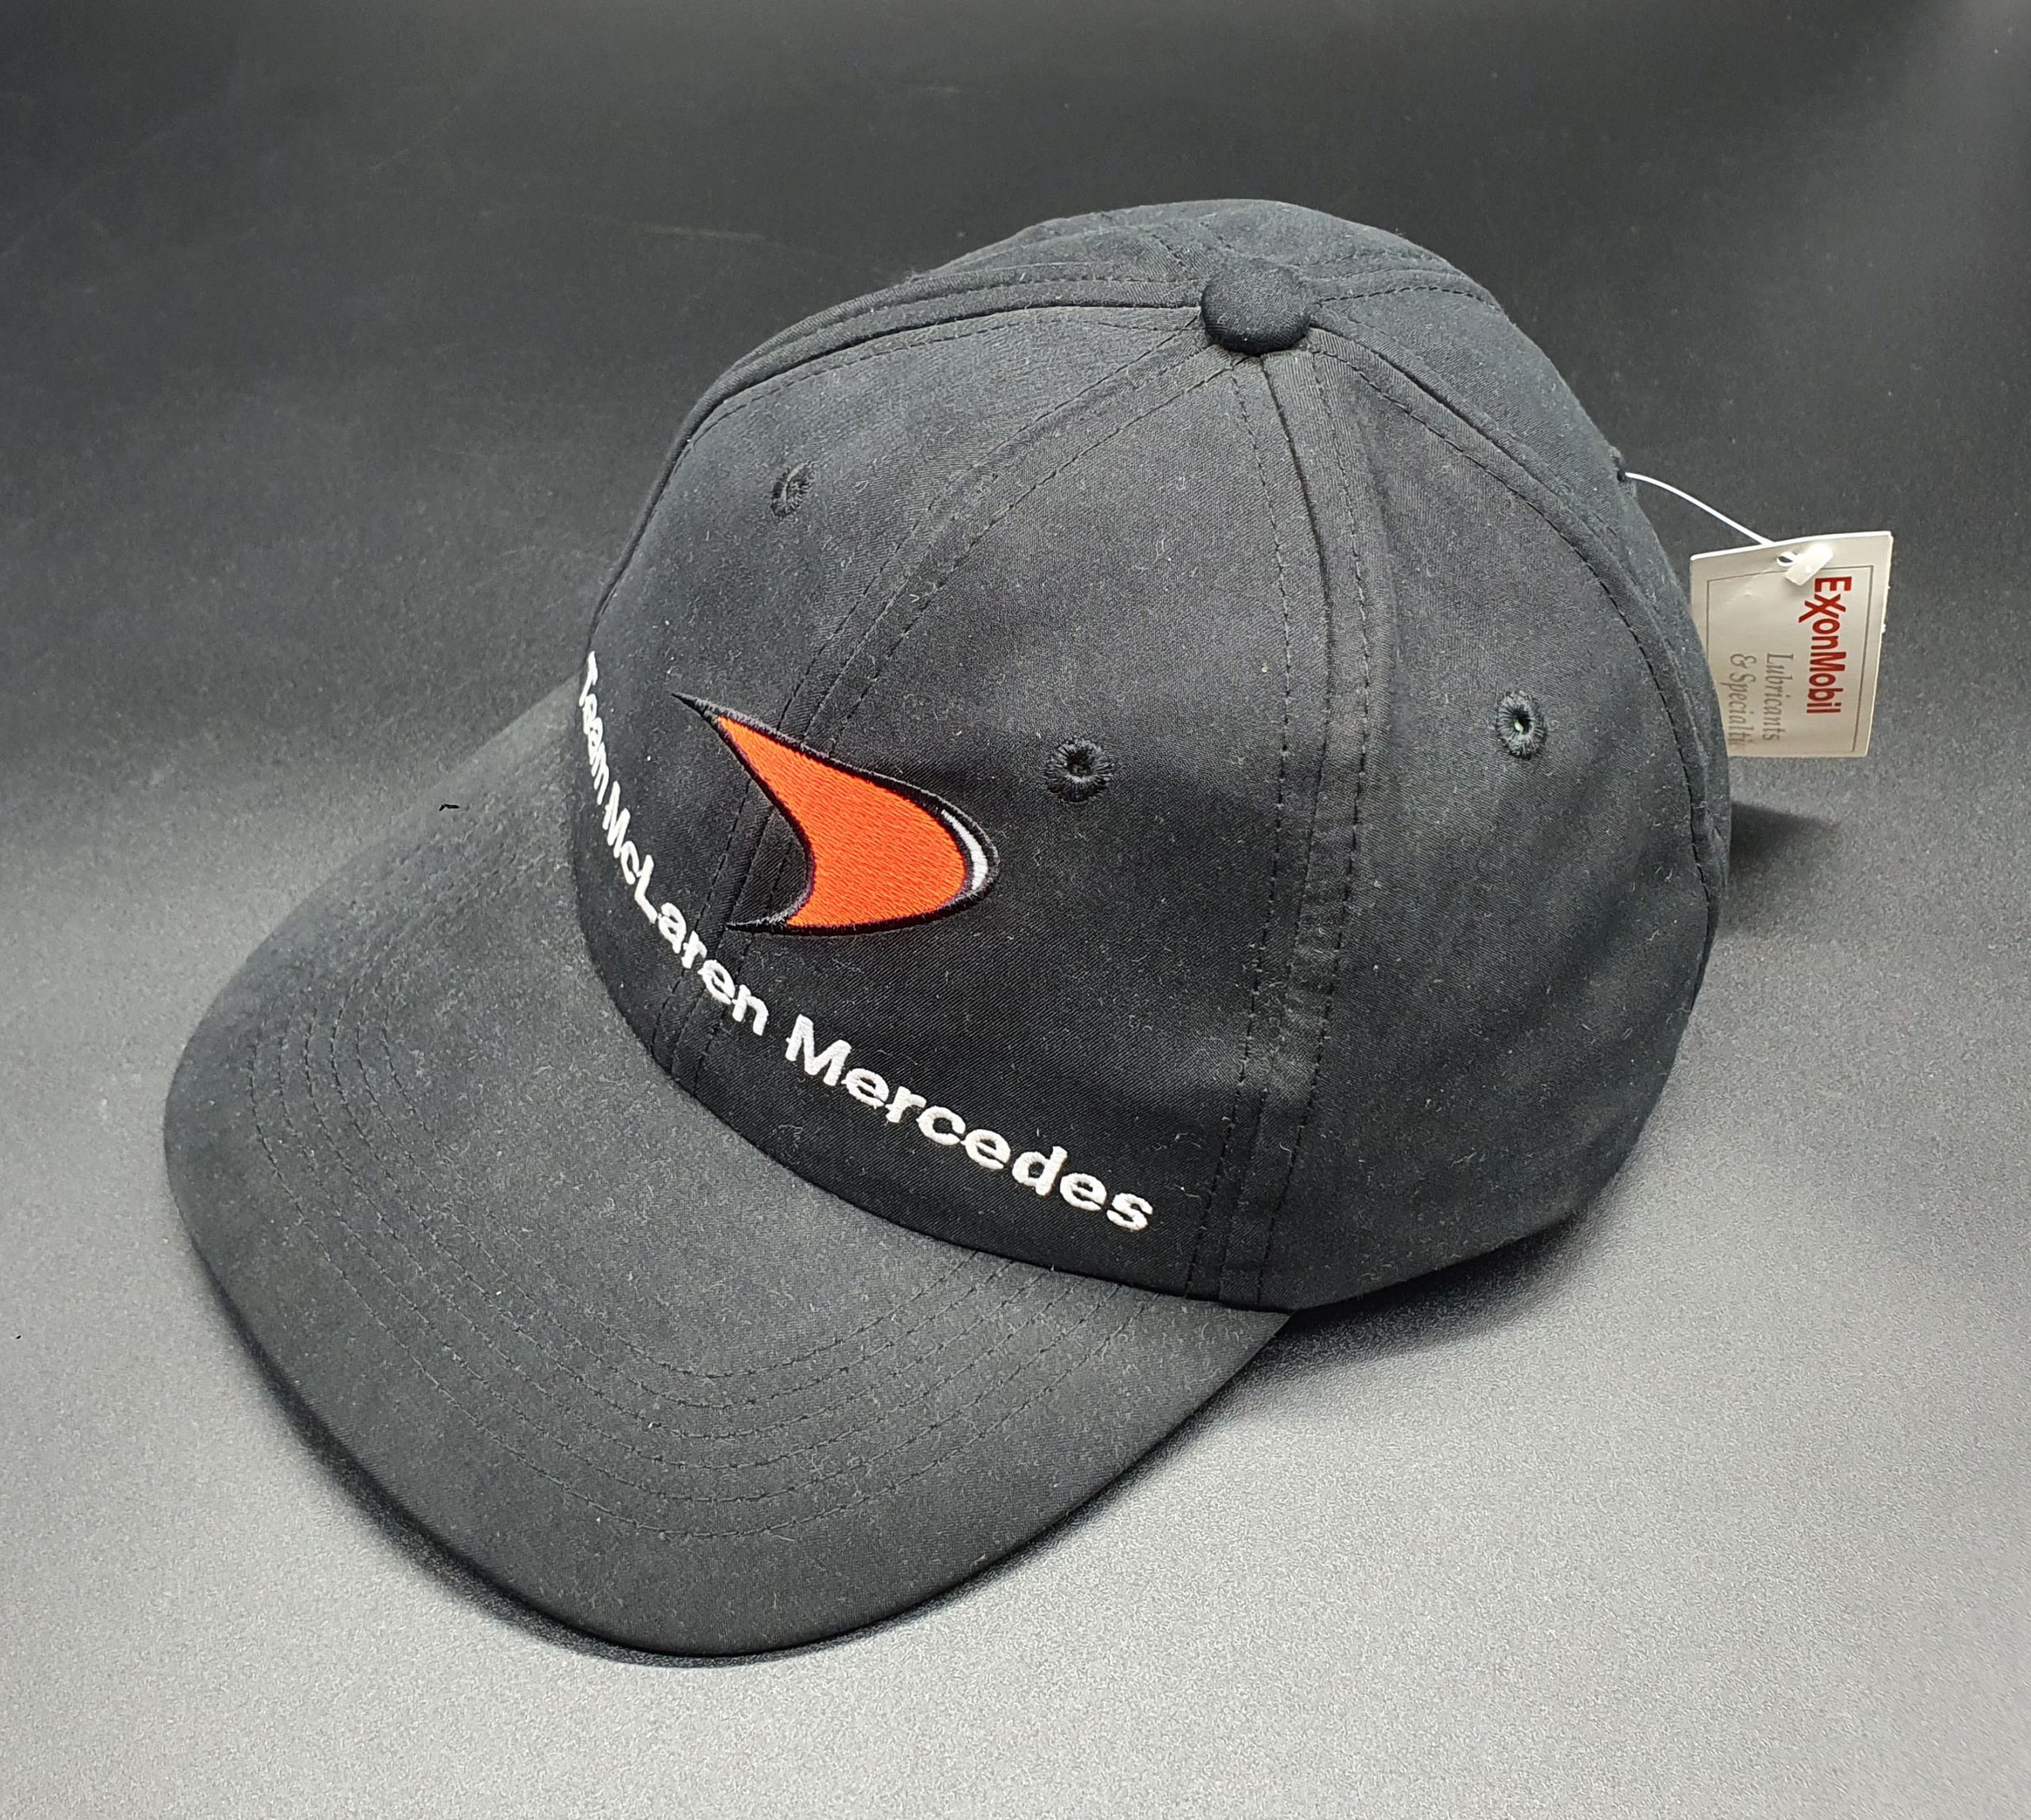 McLaren Mercedes cappellino 1997 Mobil 1